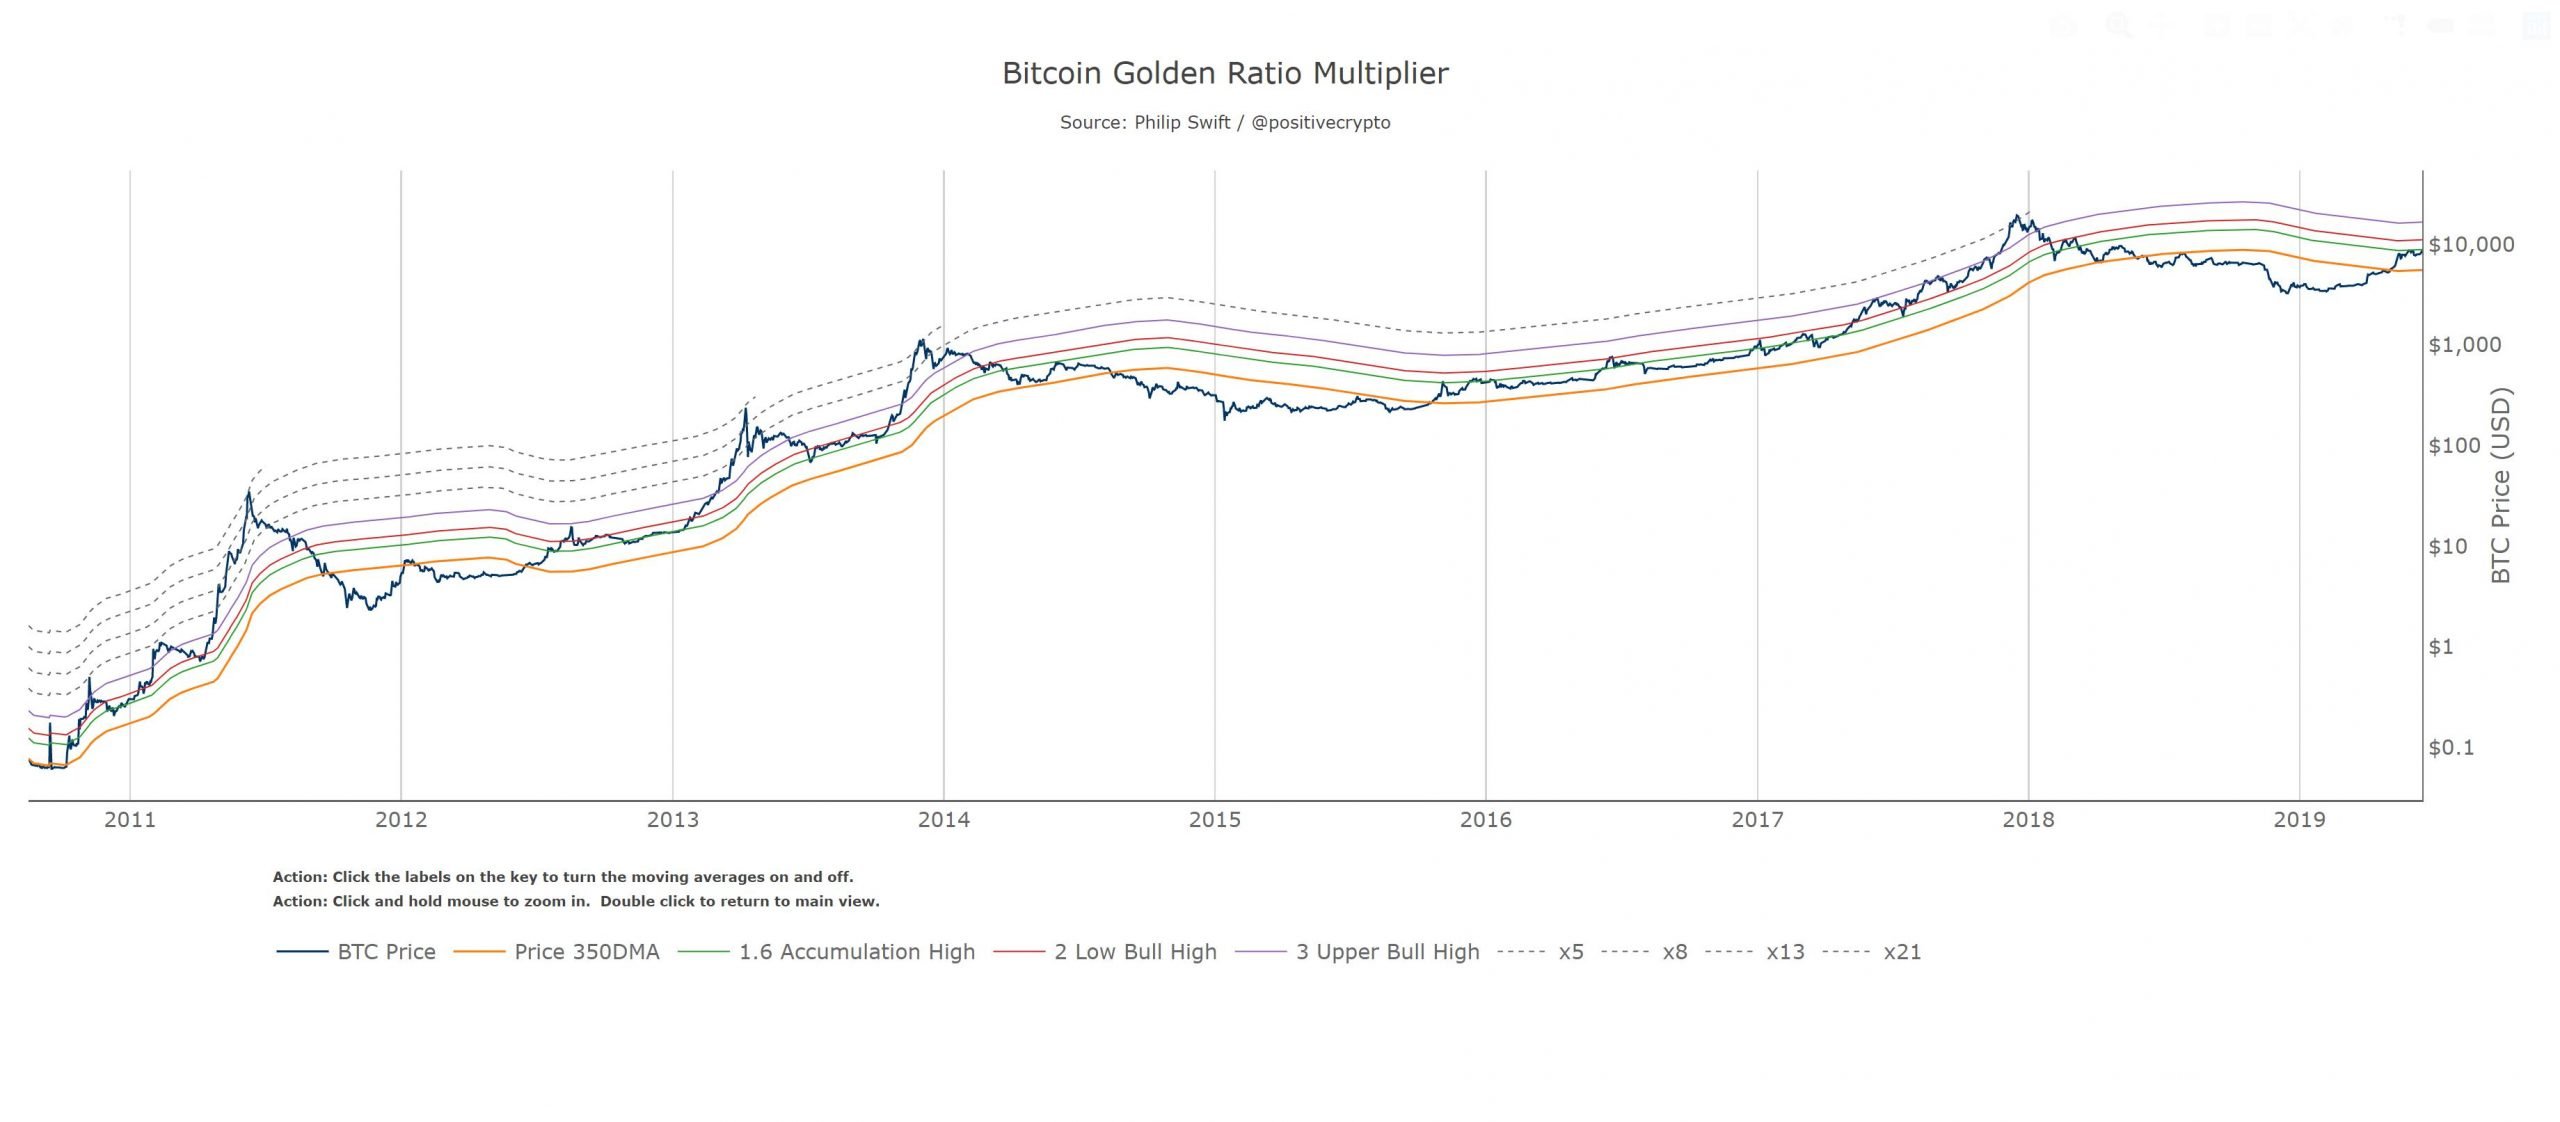 Spiral Out - استفاده از توالی طلایی و توالی فیبوناچی برای پیش بینی چرخه قیمت بیت کوین